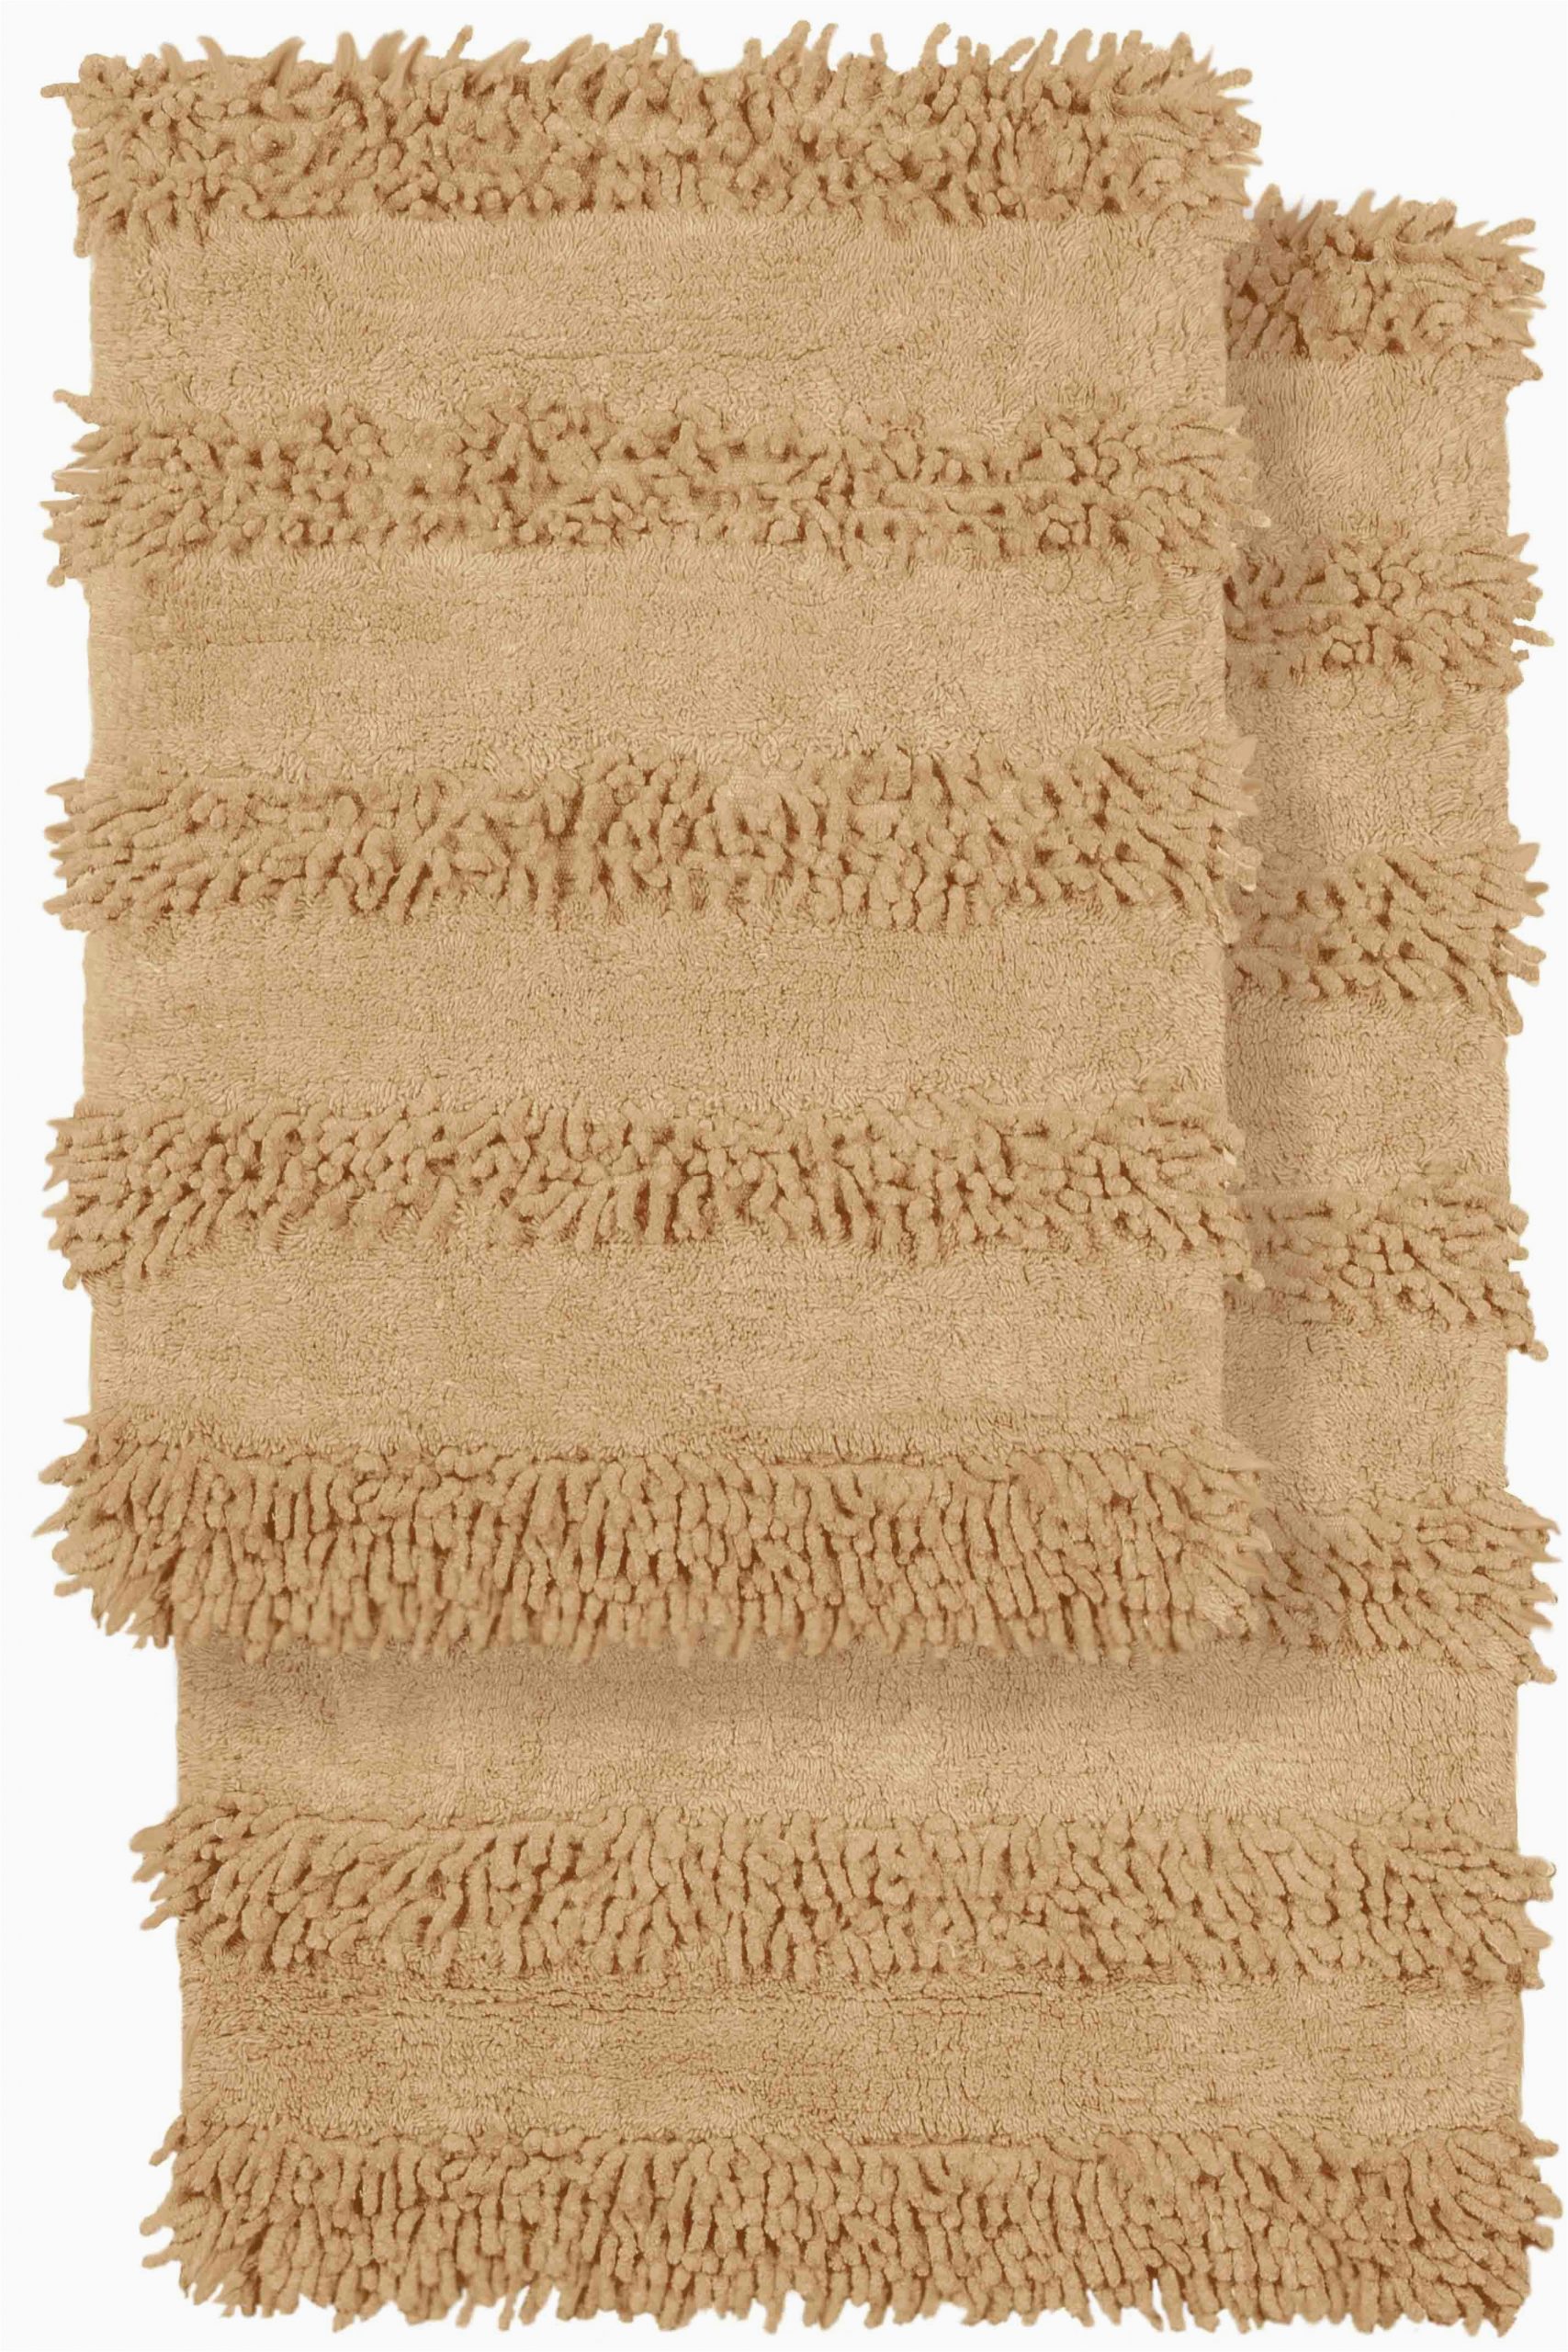 crover 2 piece modern cotton chenille solid bath mat rug set crvr1045